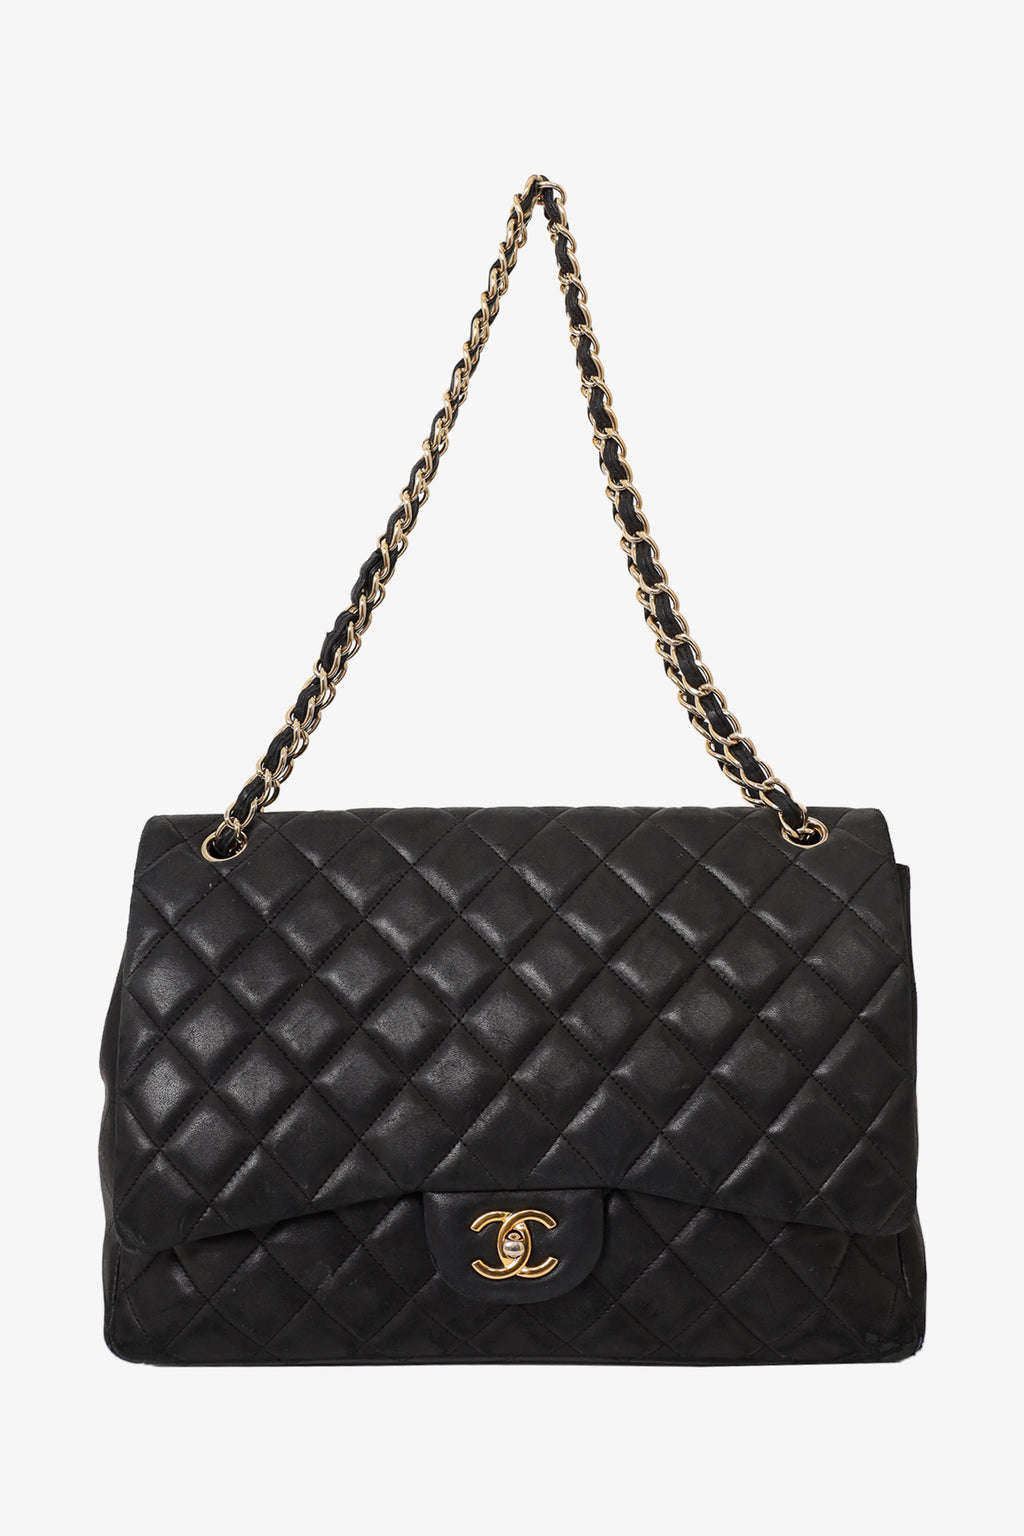 Pre-loved Chanel™ Black Lambskin Leather Jumbo Classic Single Flap Bag ...